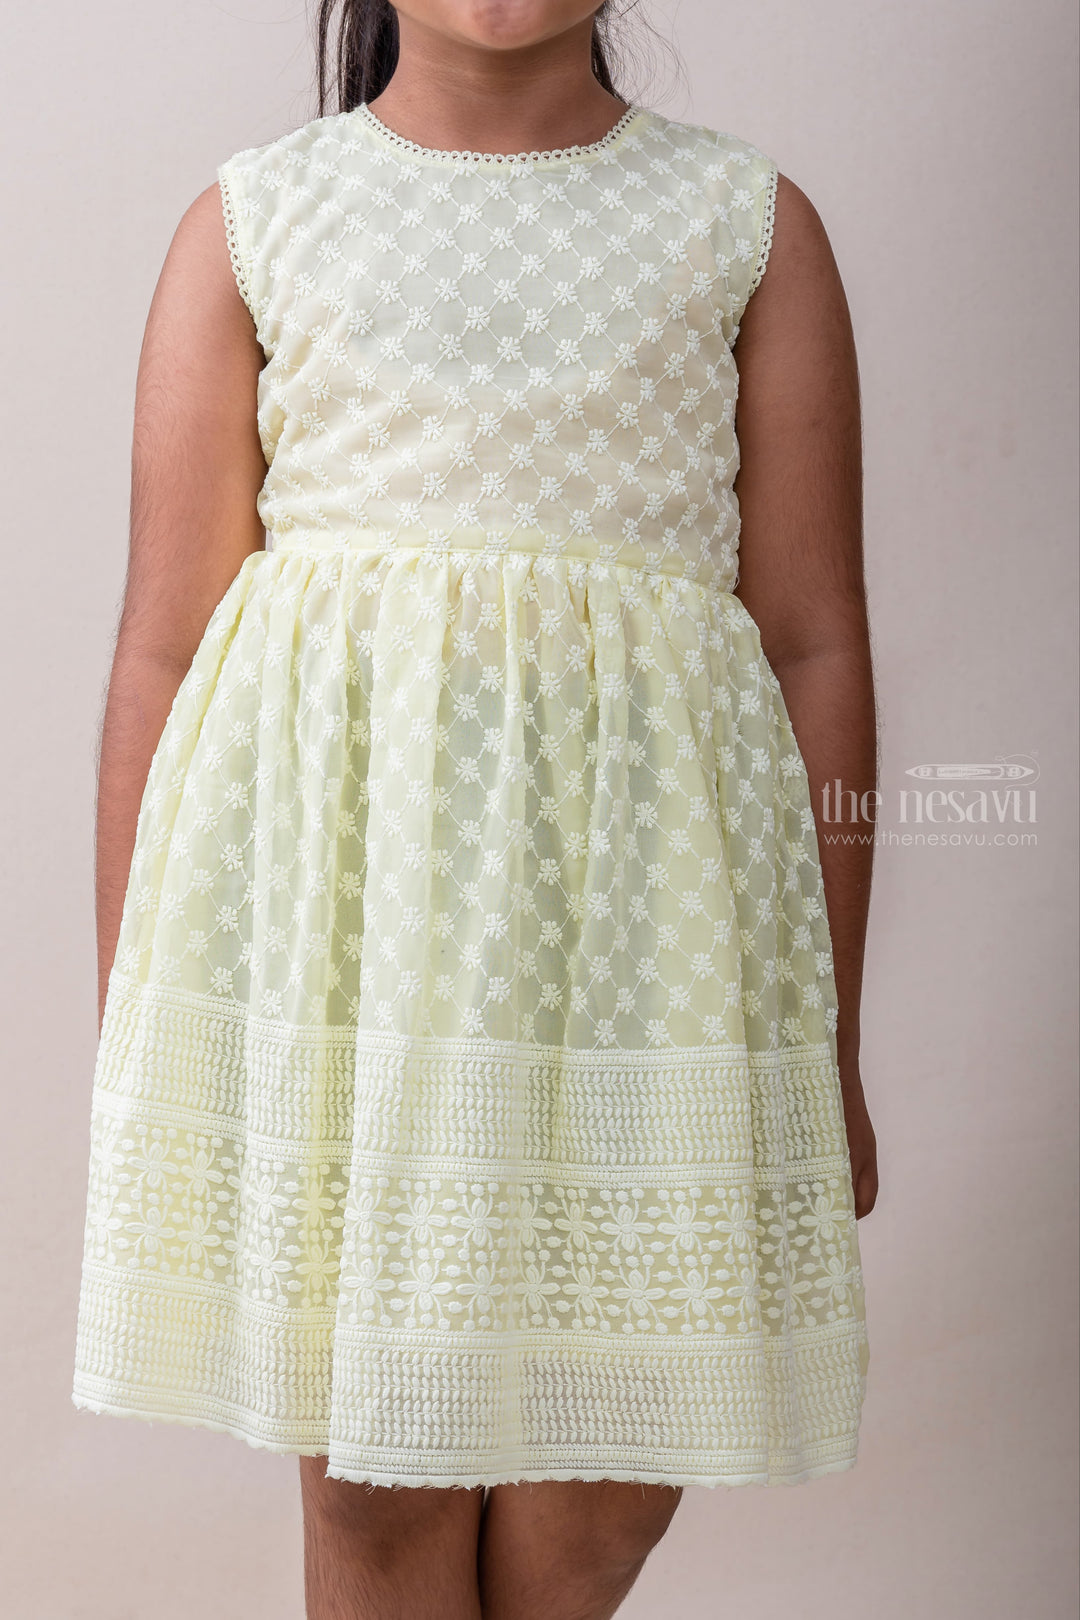 The Nesavu Frocks & Dresses Yellow Casual Threaded Cotton Frock For Baby Girl psr silks Nesavu